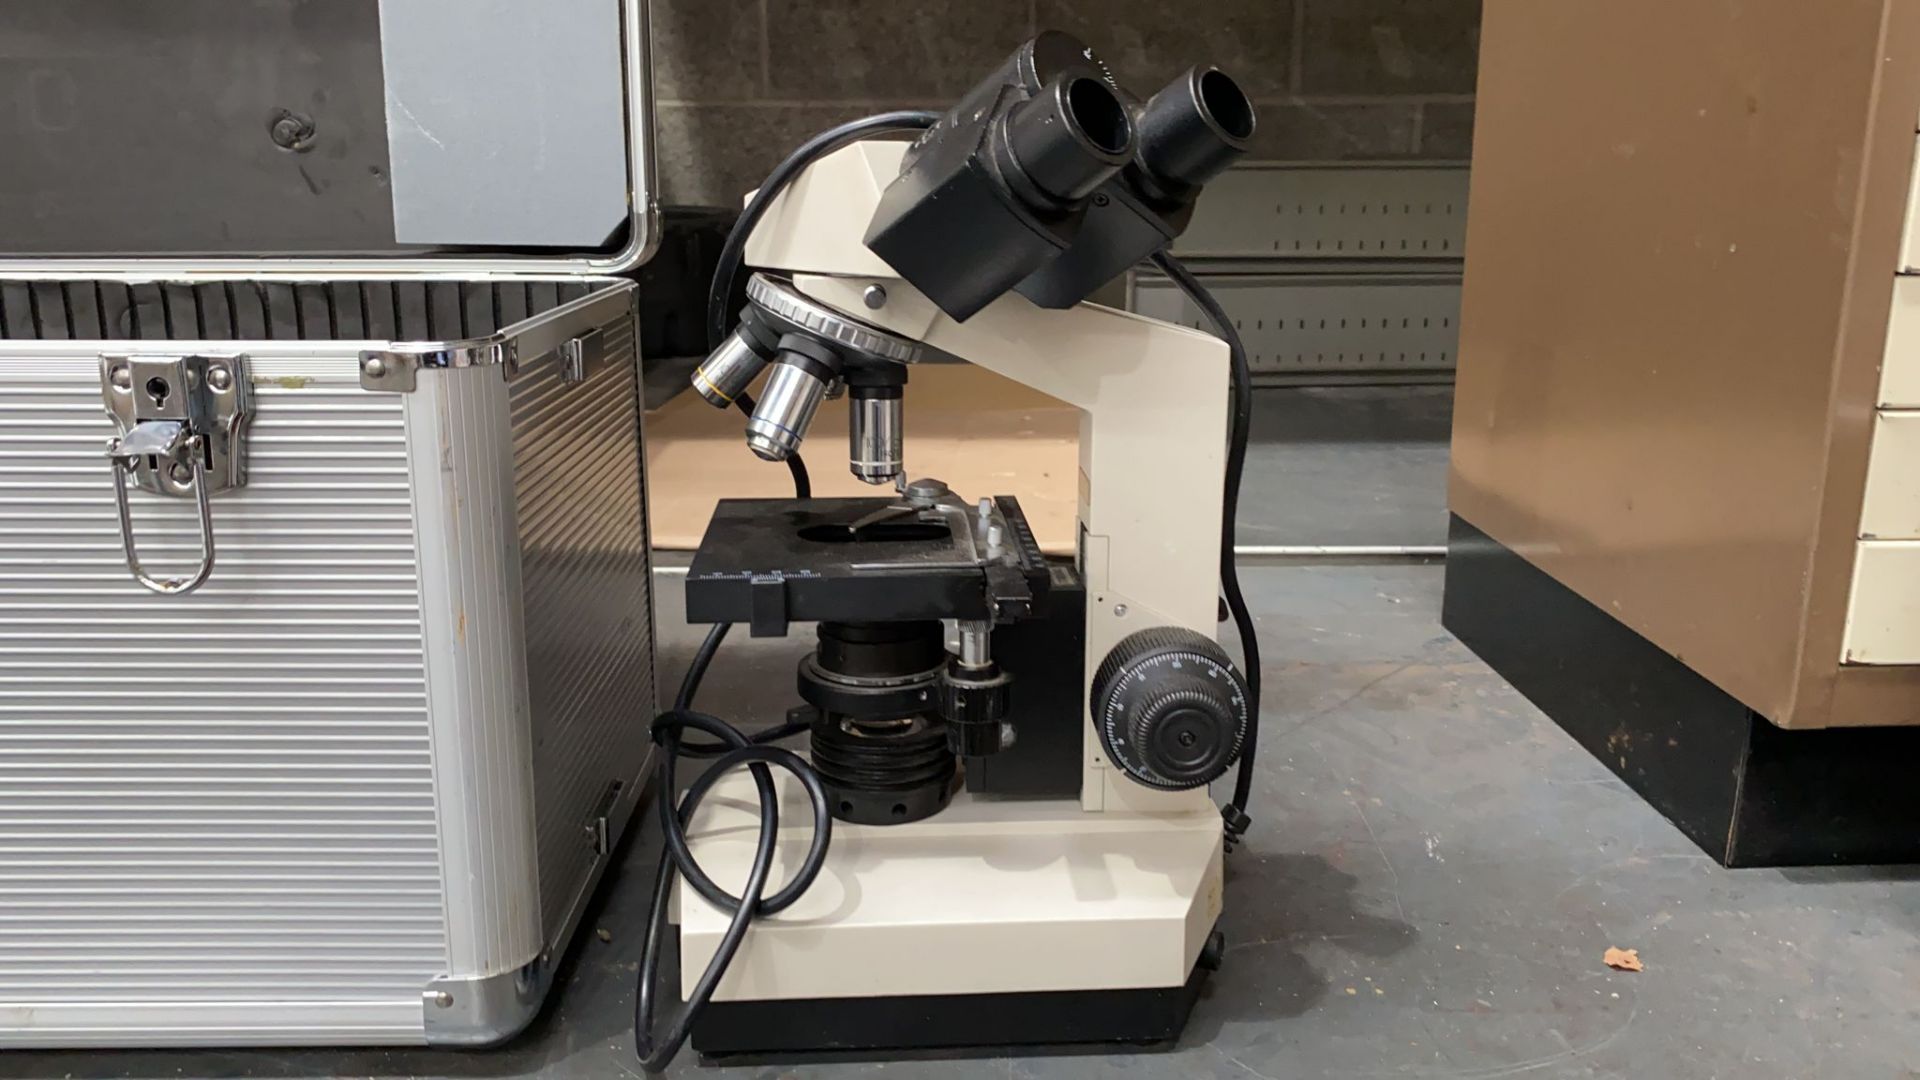 Microscope in Metal Box - Image 3 of 7